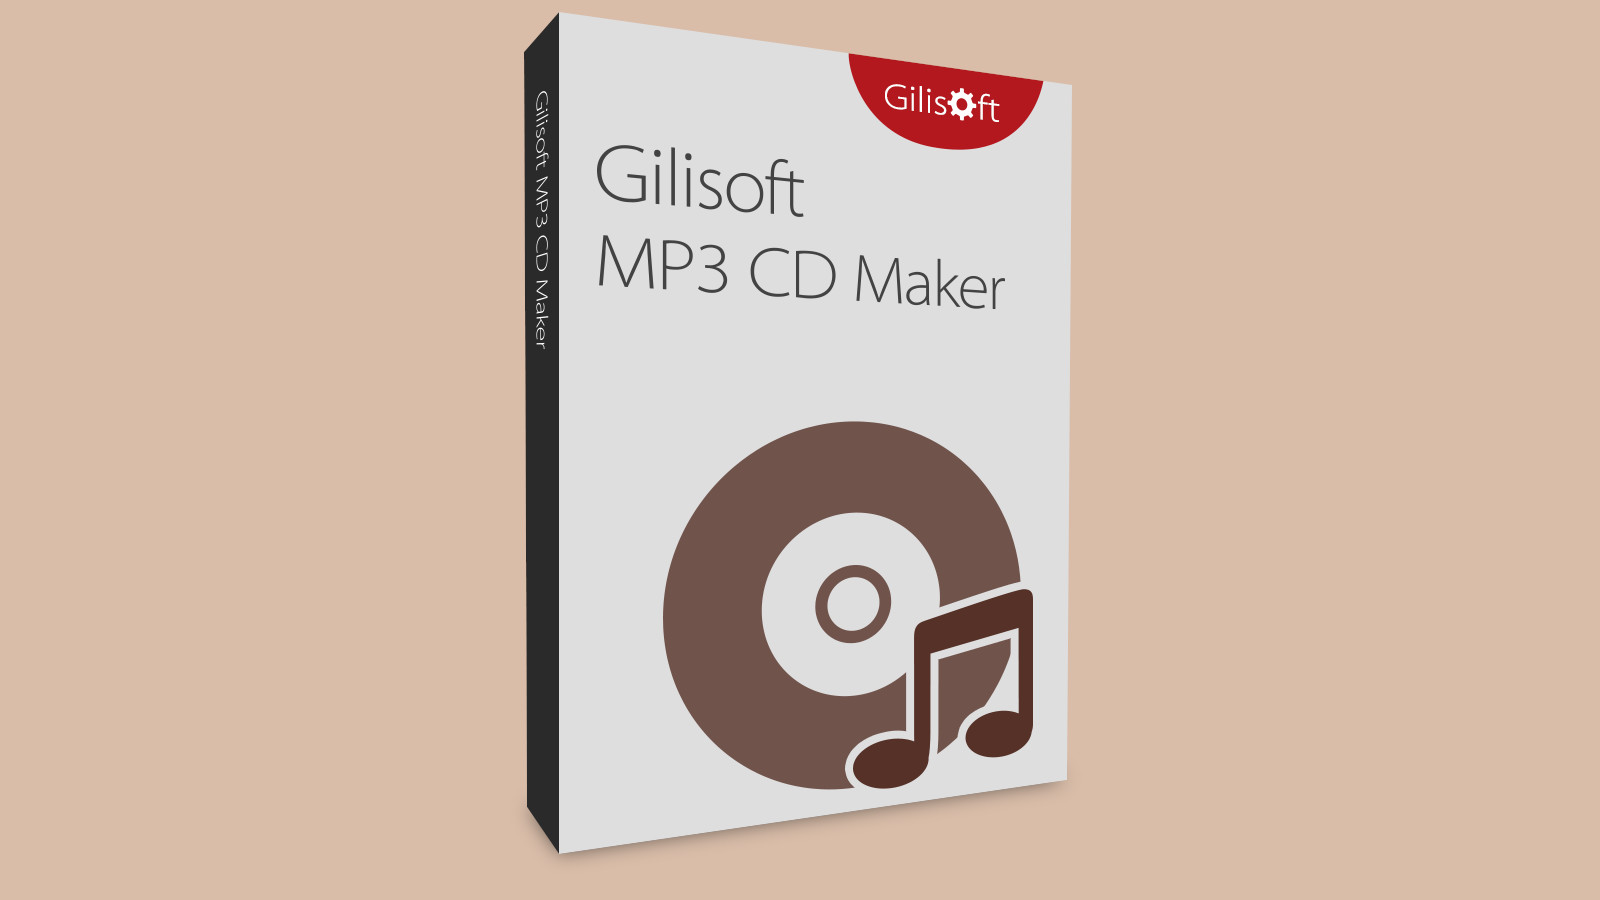 Gilisoft MP3 CD Maker CD Key, 5.65$